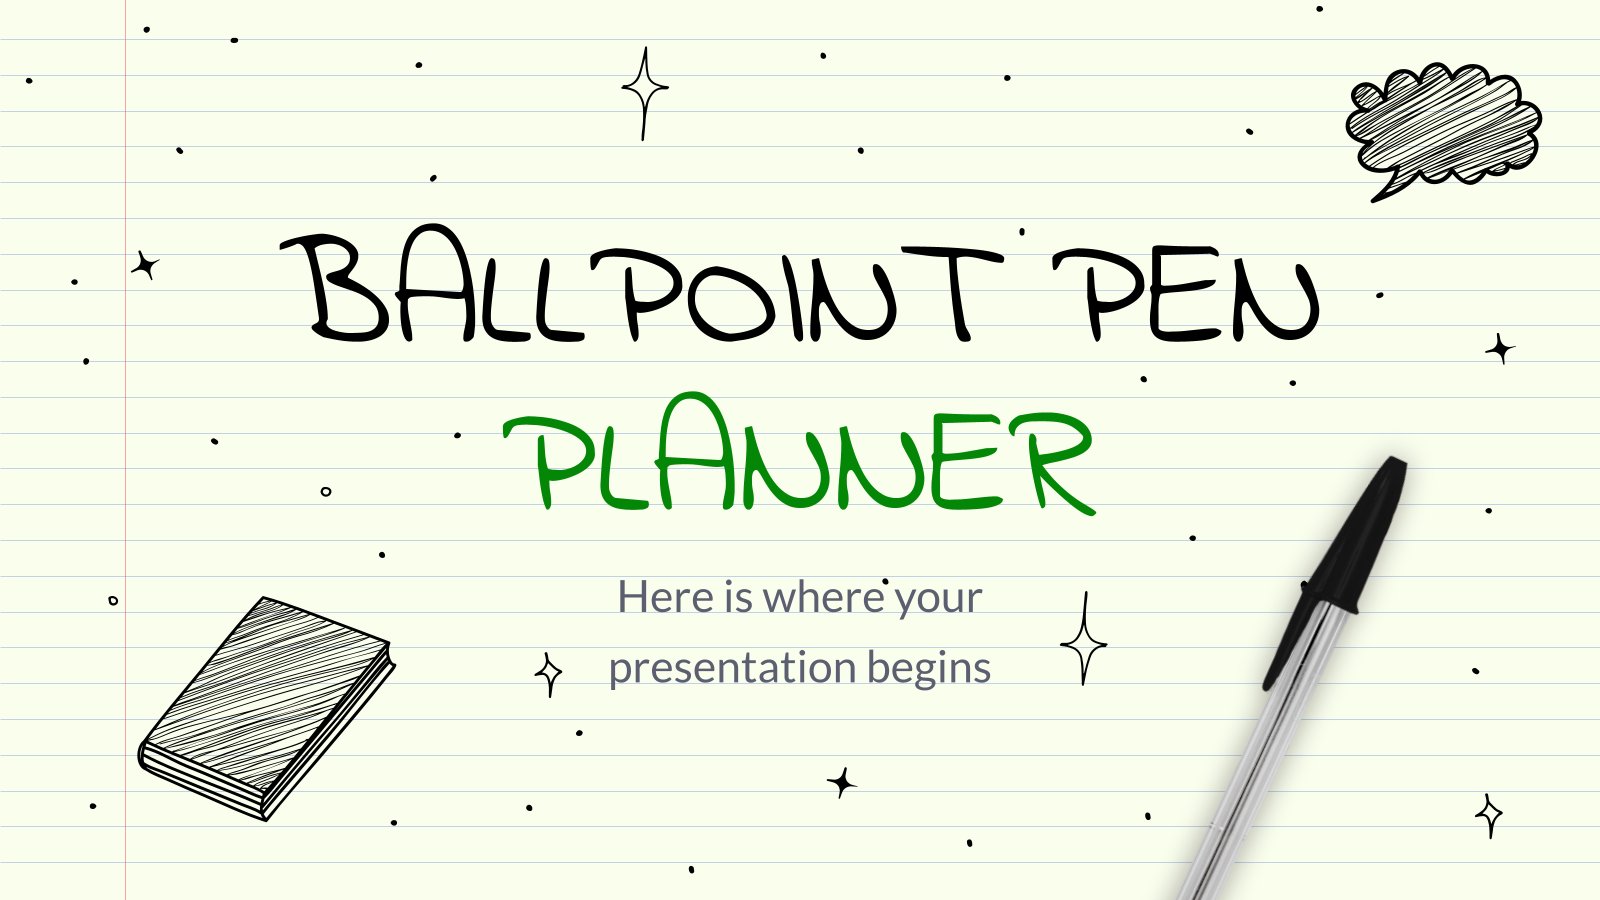 Ballpoint Pen Planner presentation template 